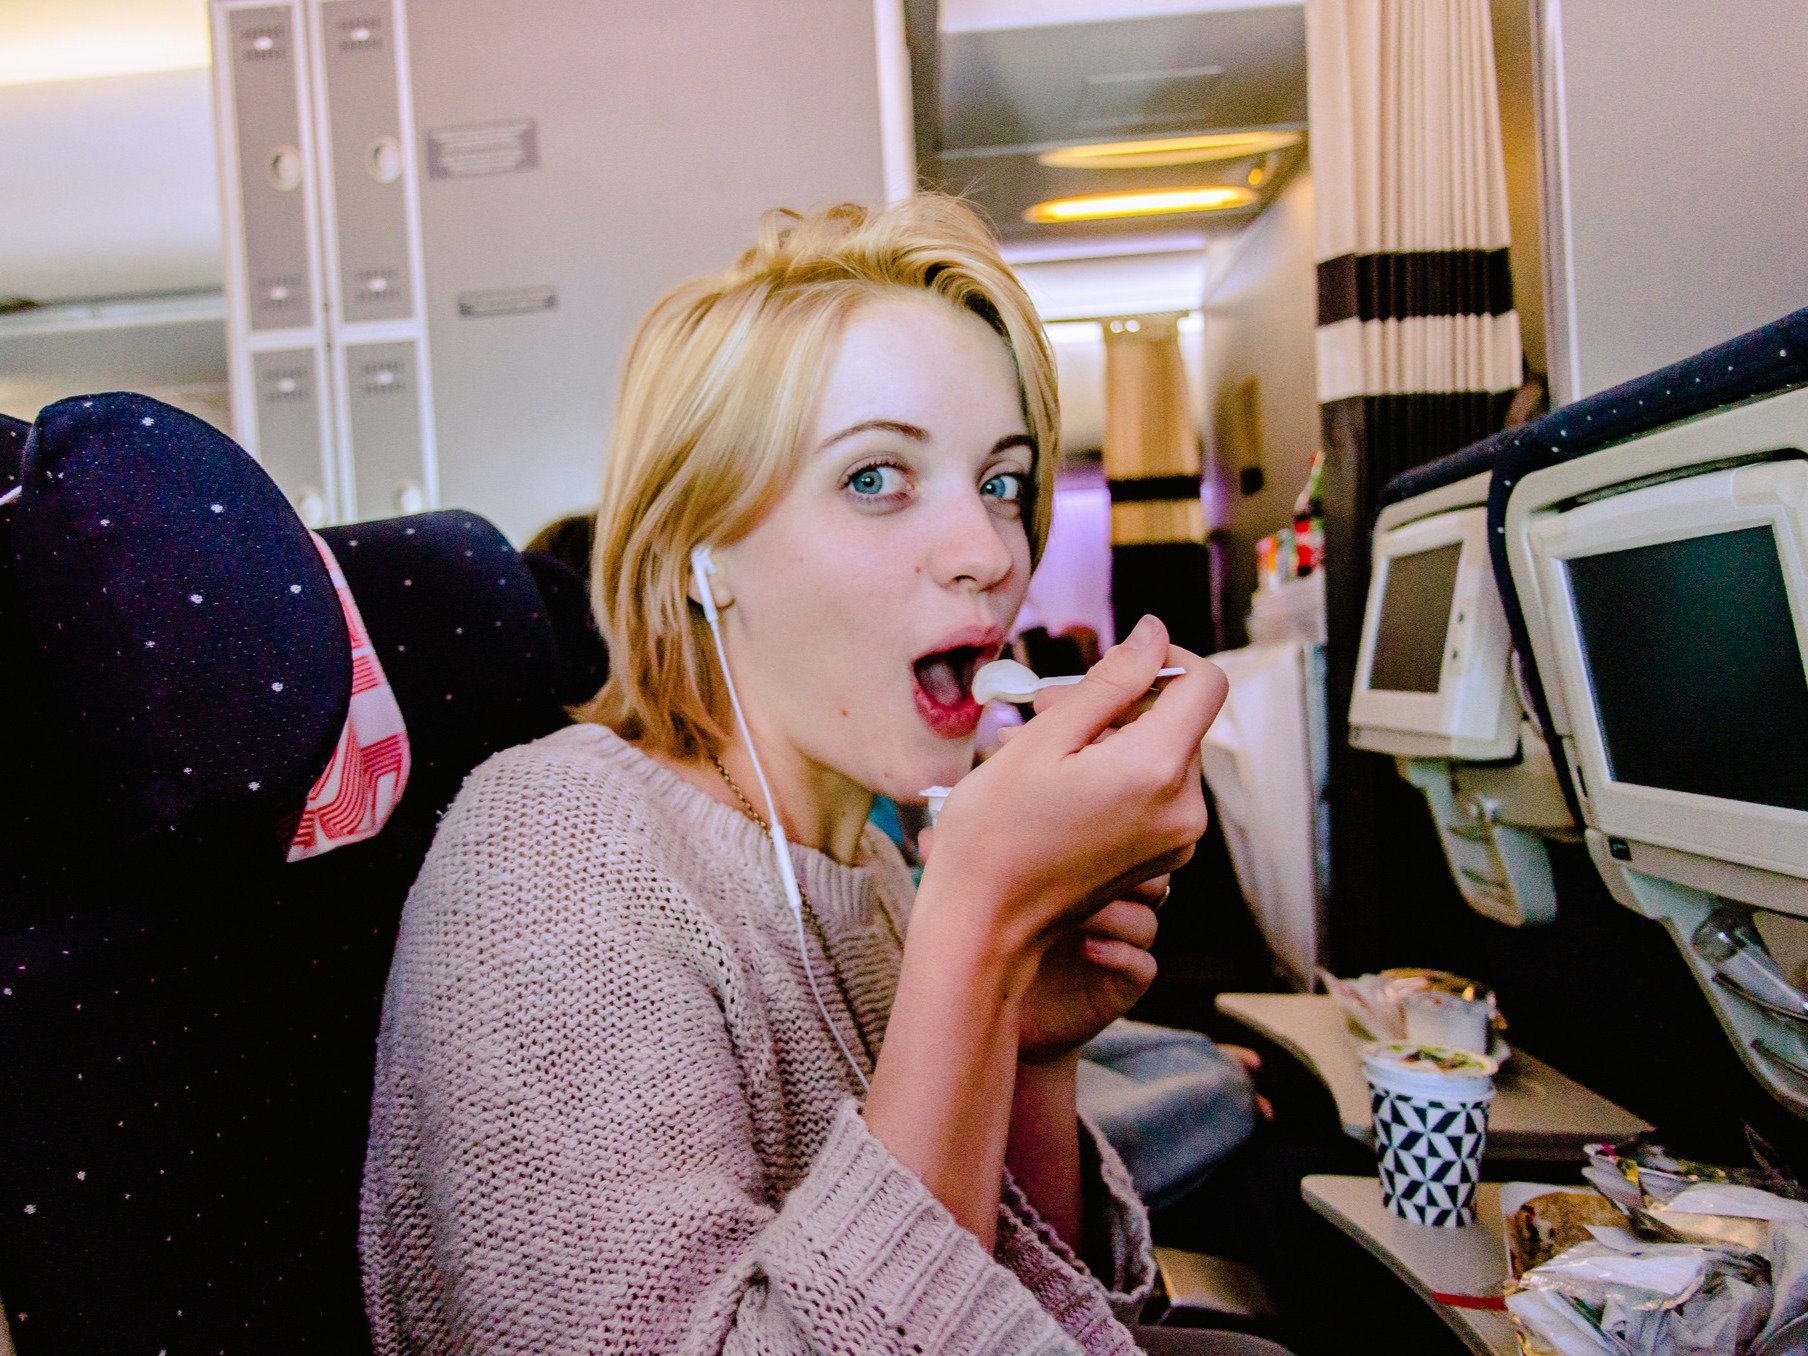 woman-eating-yogurt-on-plane